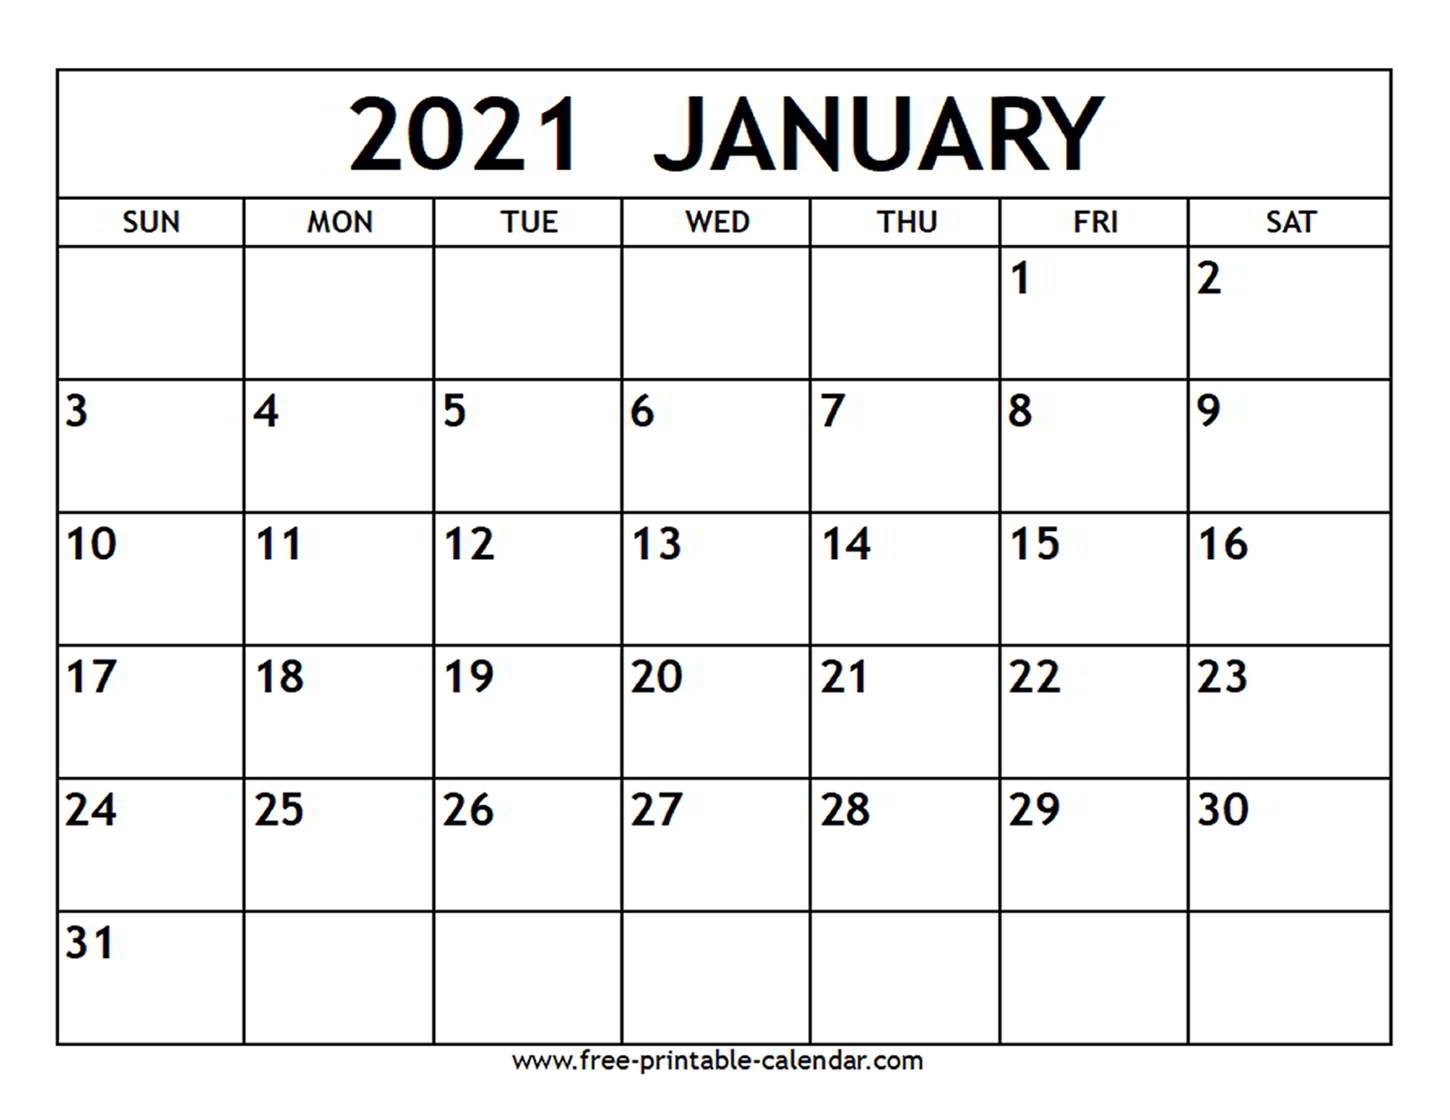 Catch 2021 Calendar Print Out